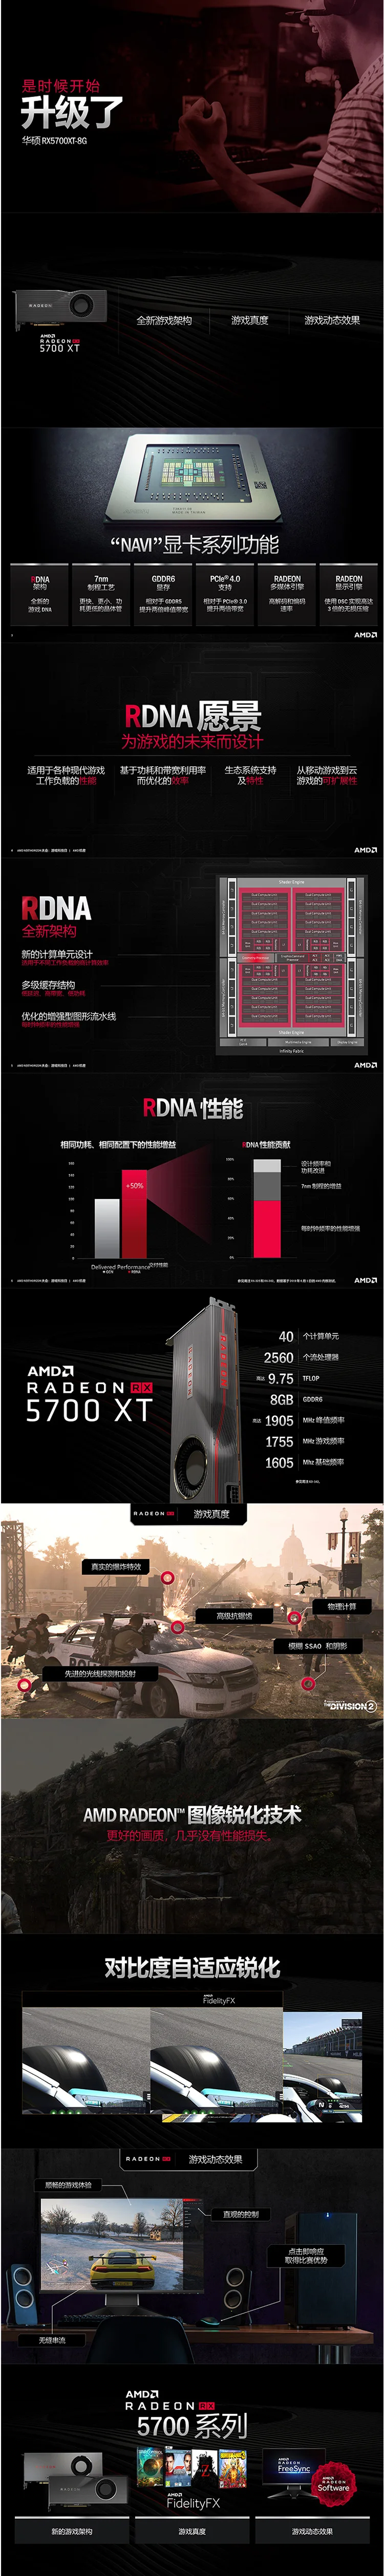 Игровая графика ASUS Radeon RX 5700 XT 7nm RDNA architecture 8G GDDR6